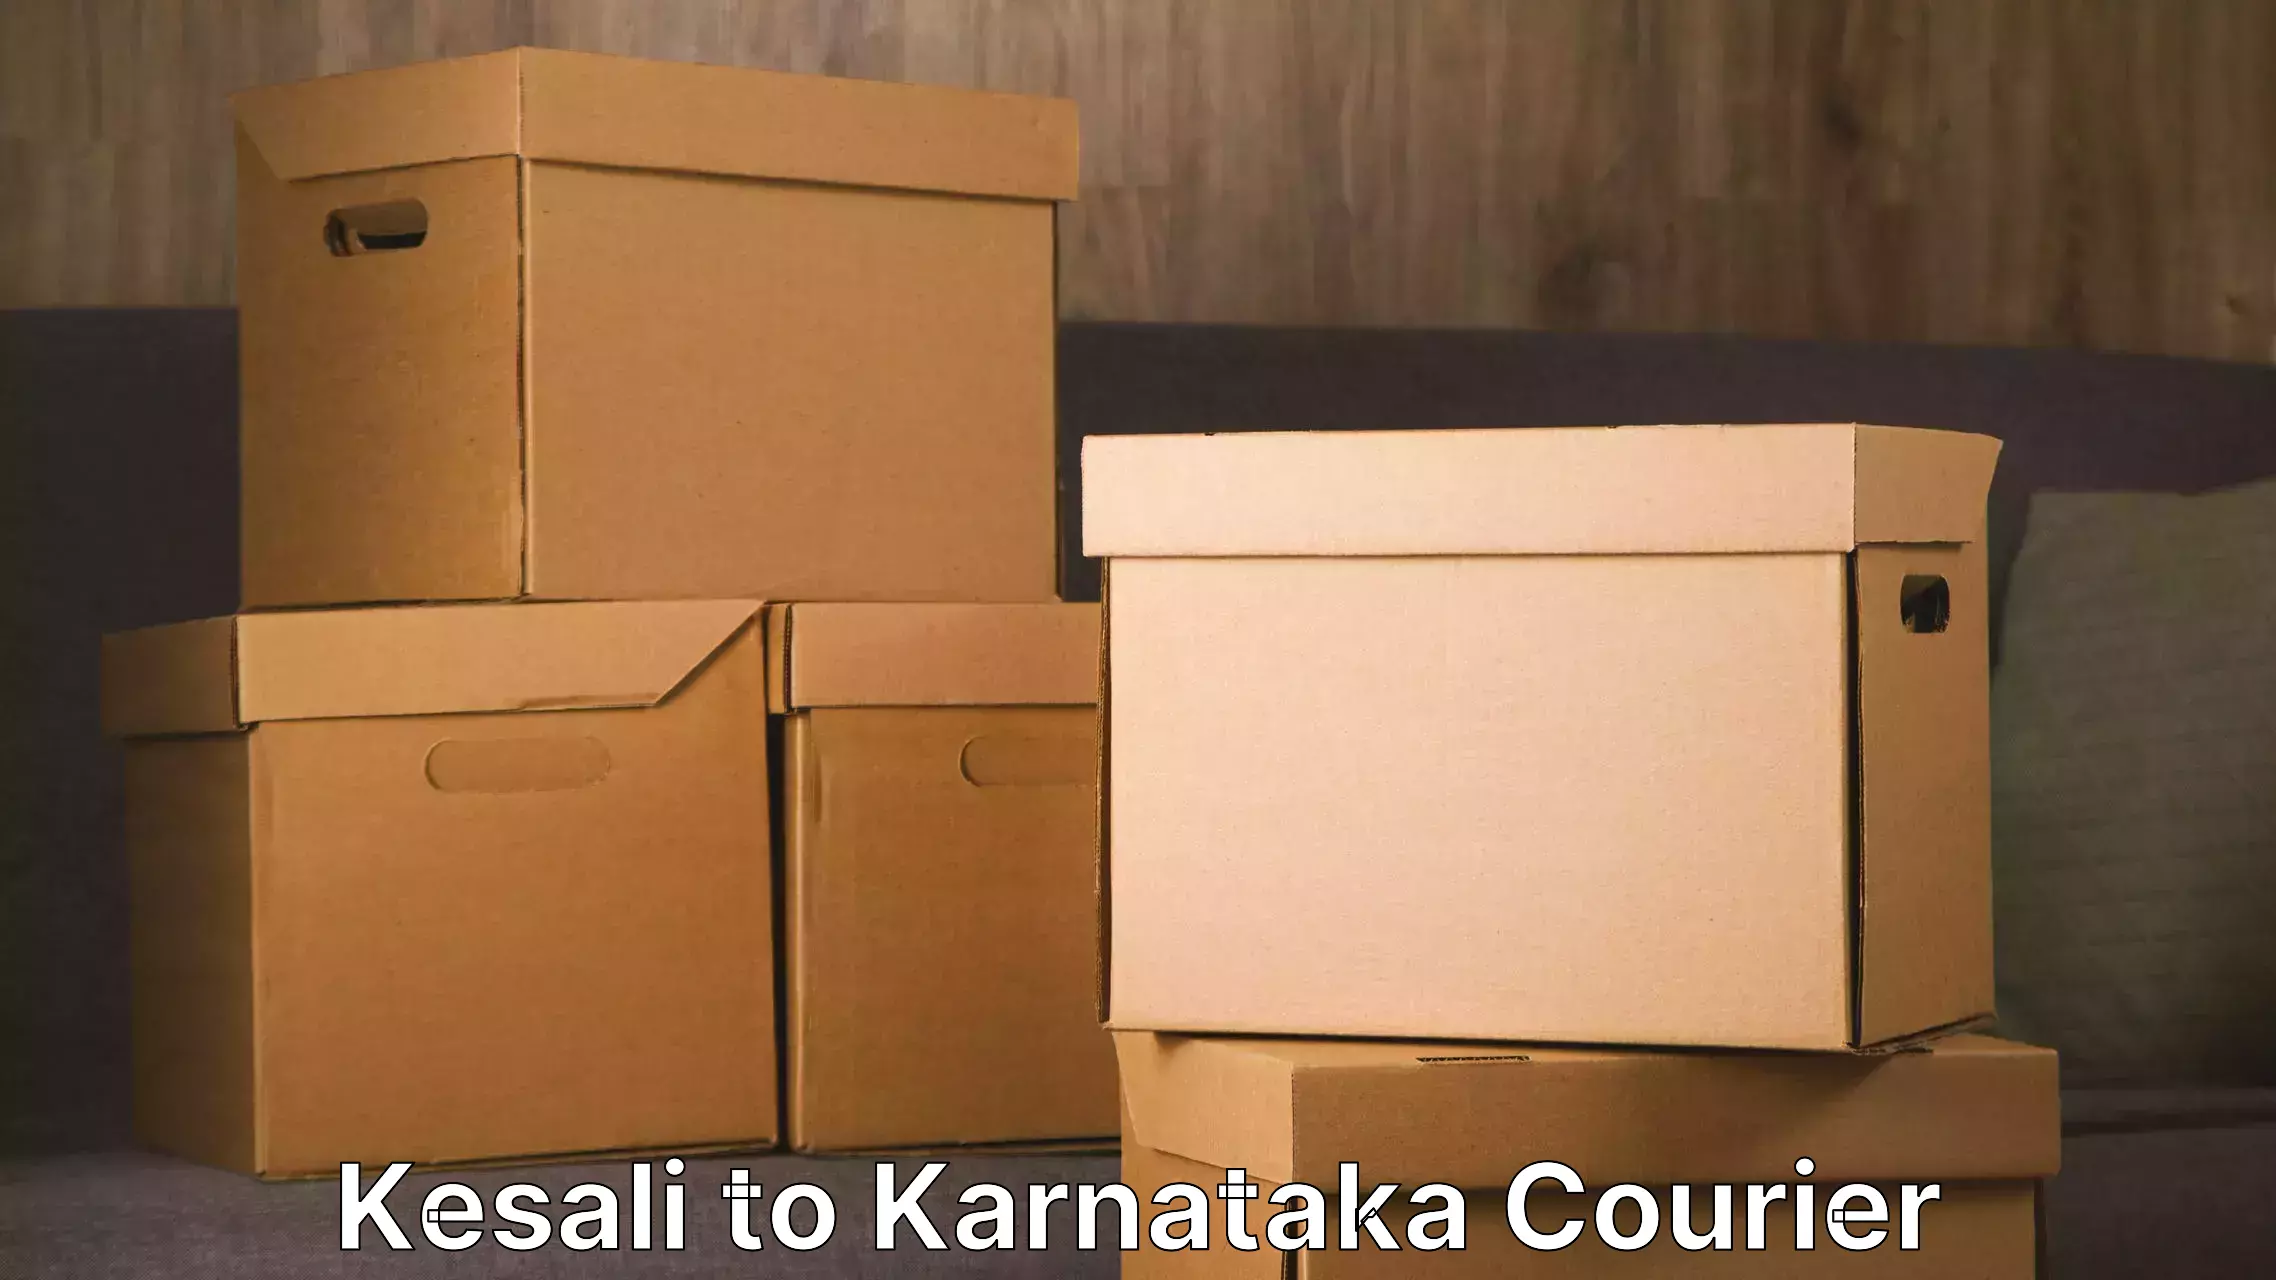 Dependable furniture movers Kesali to Bangalore